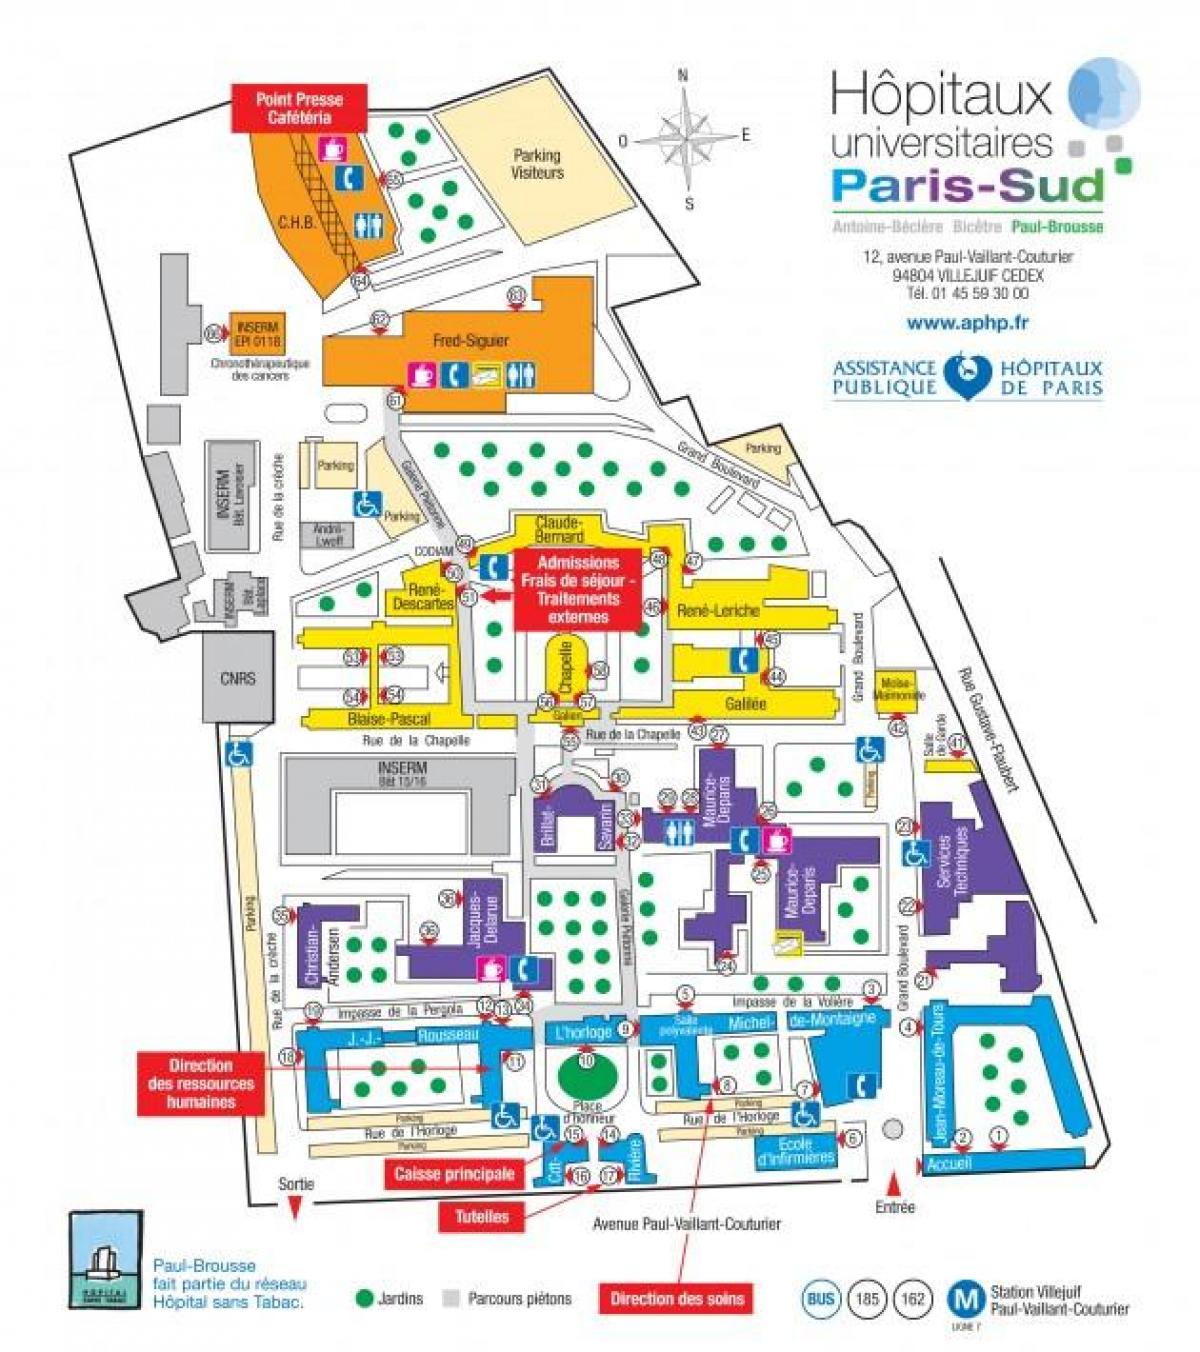 Mapa de Galicia-Brousse hospital